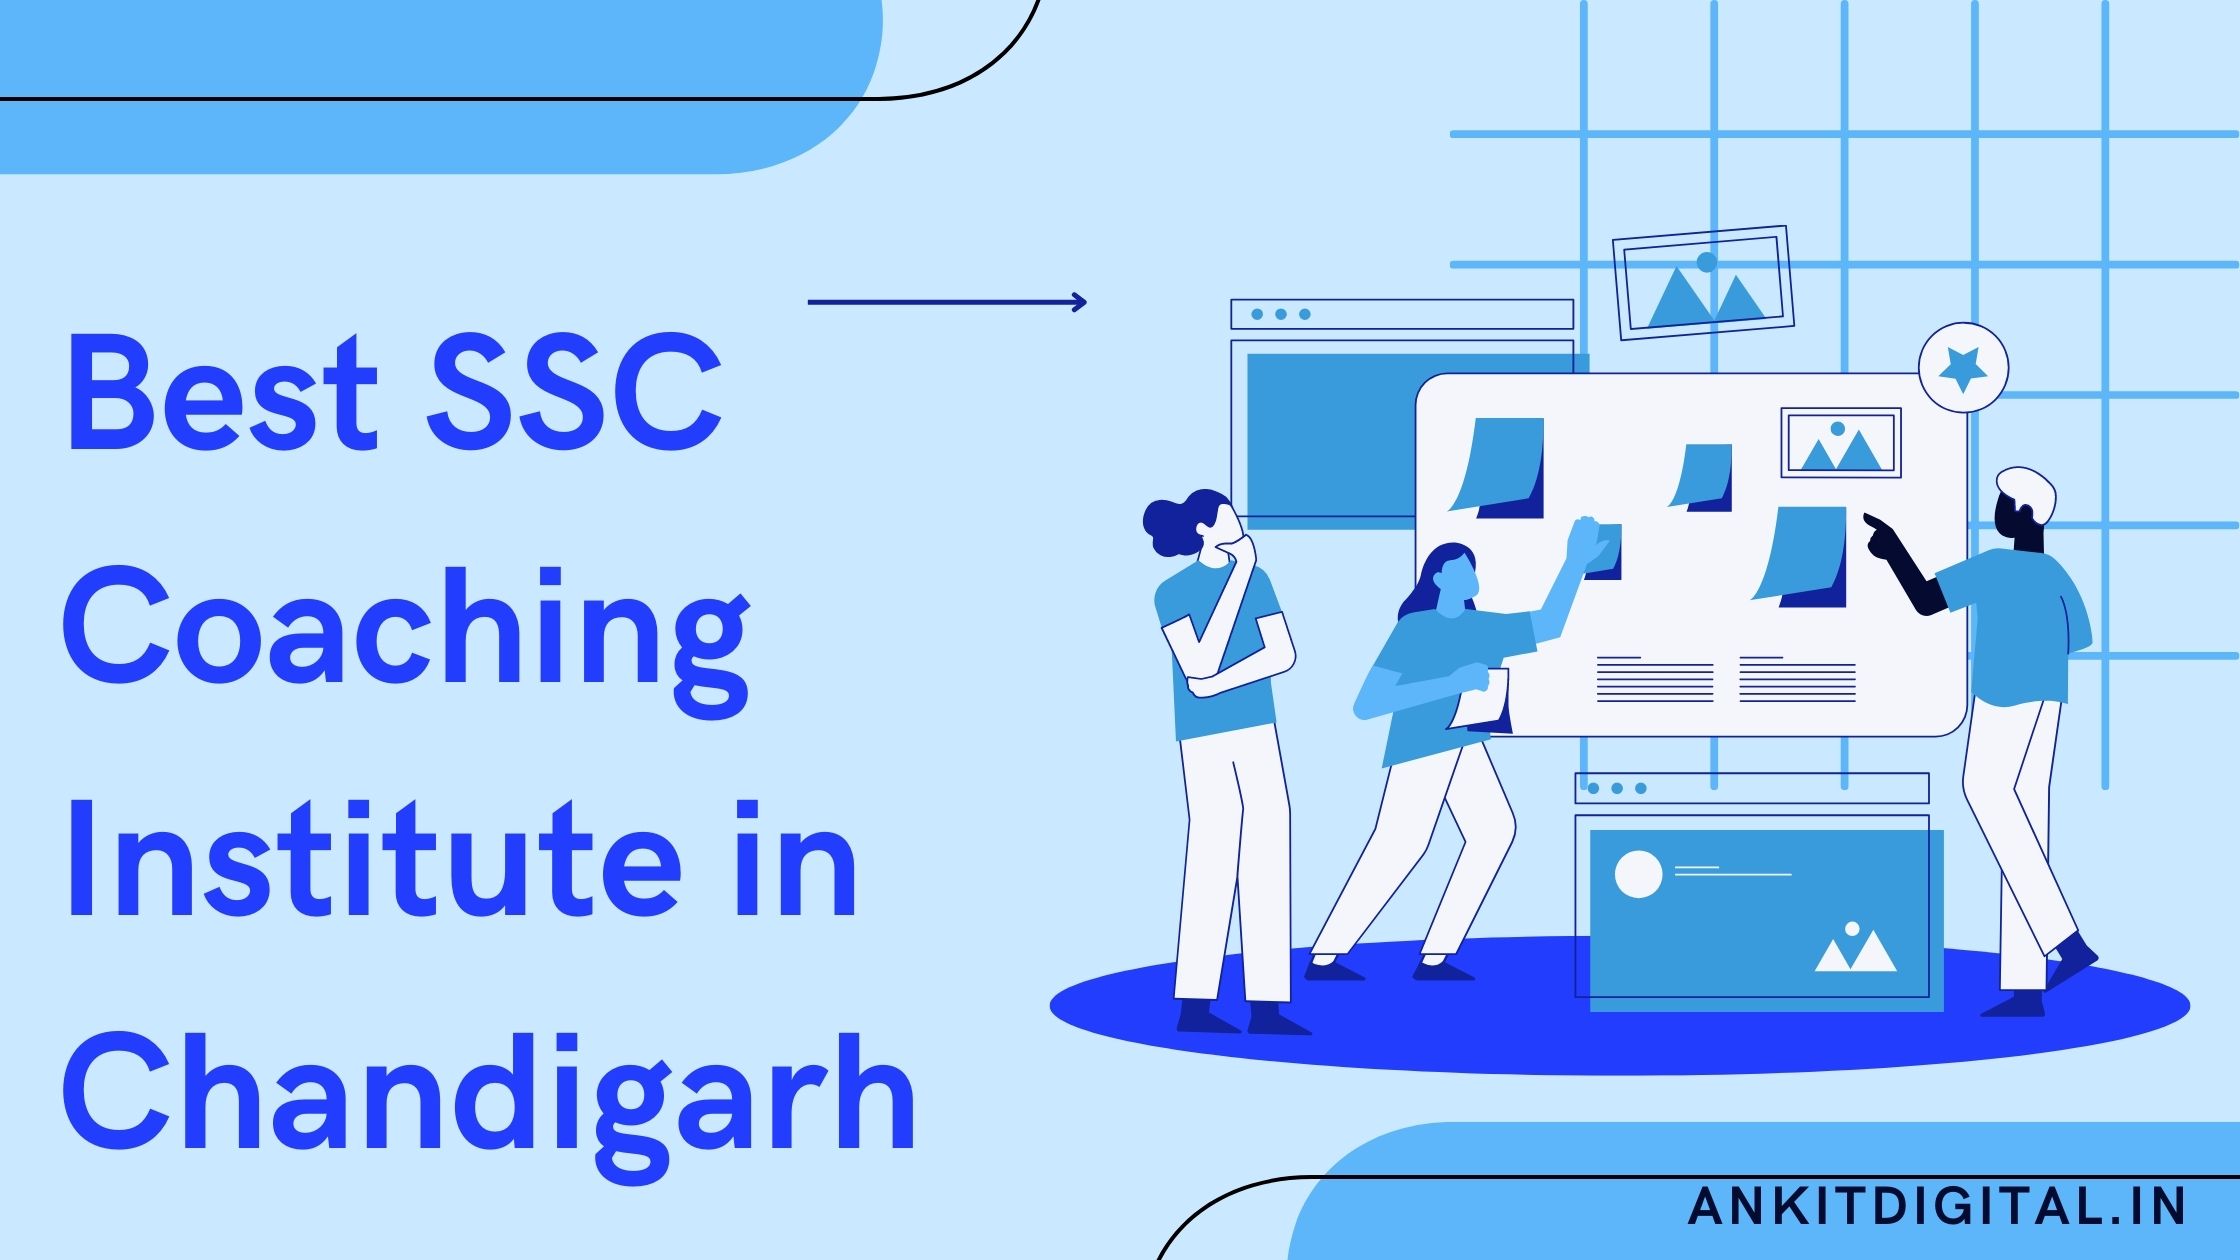 Best SSC Coaching Institute in Chandigarh